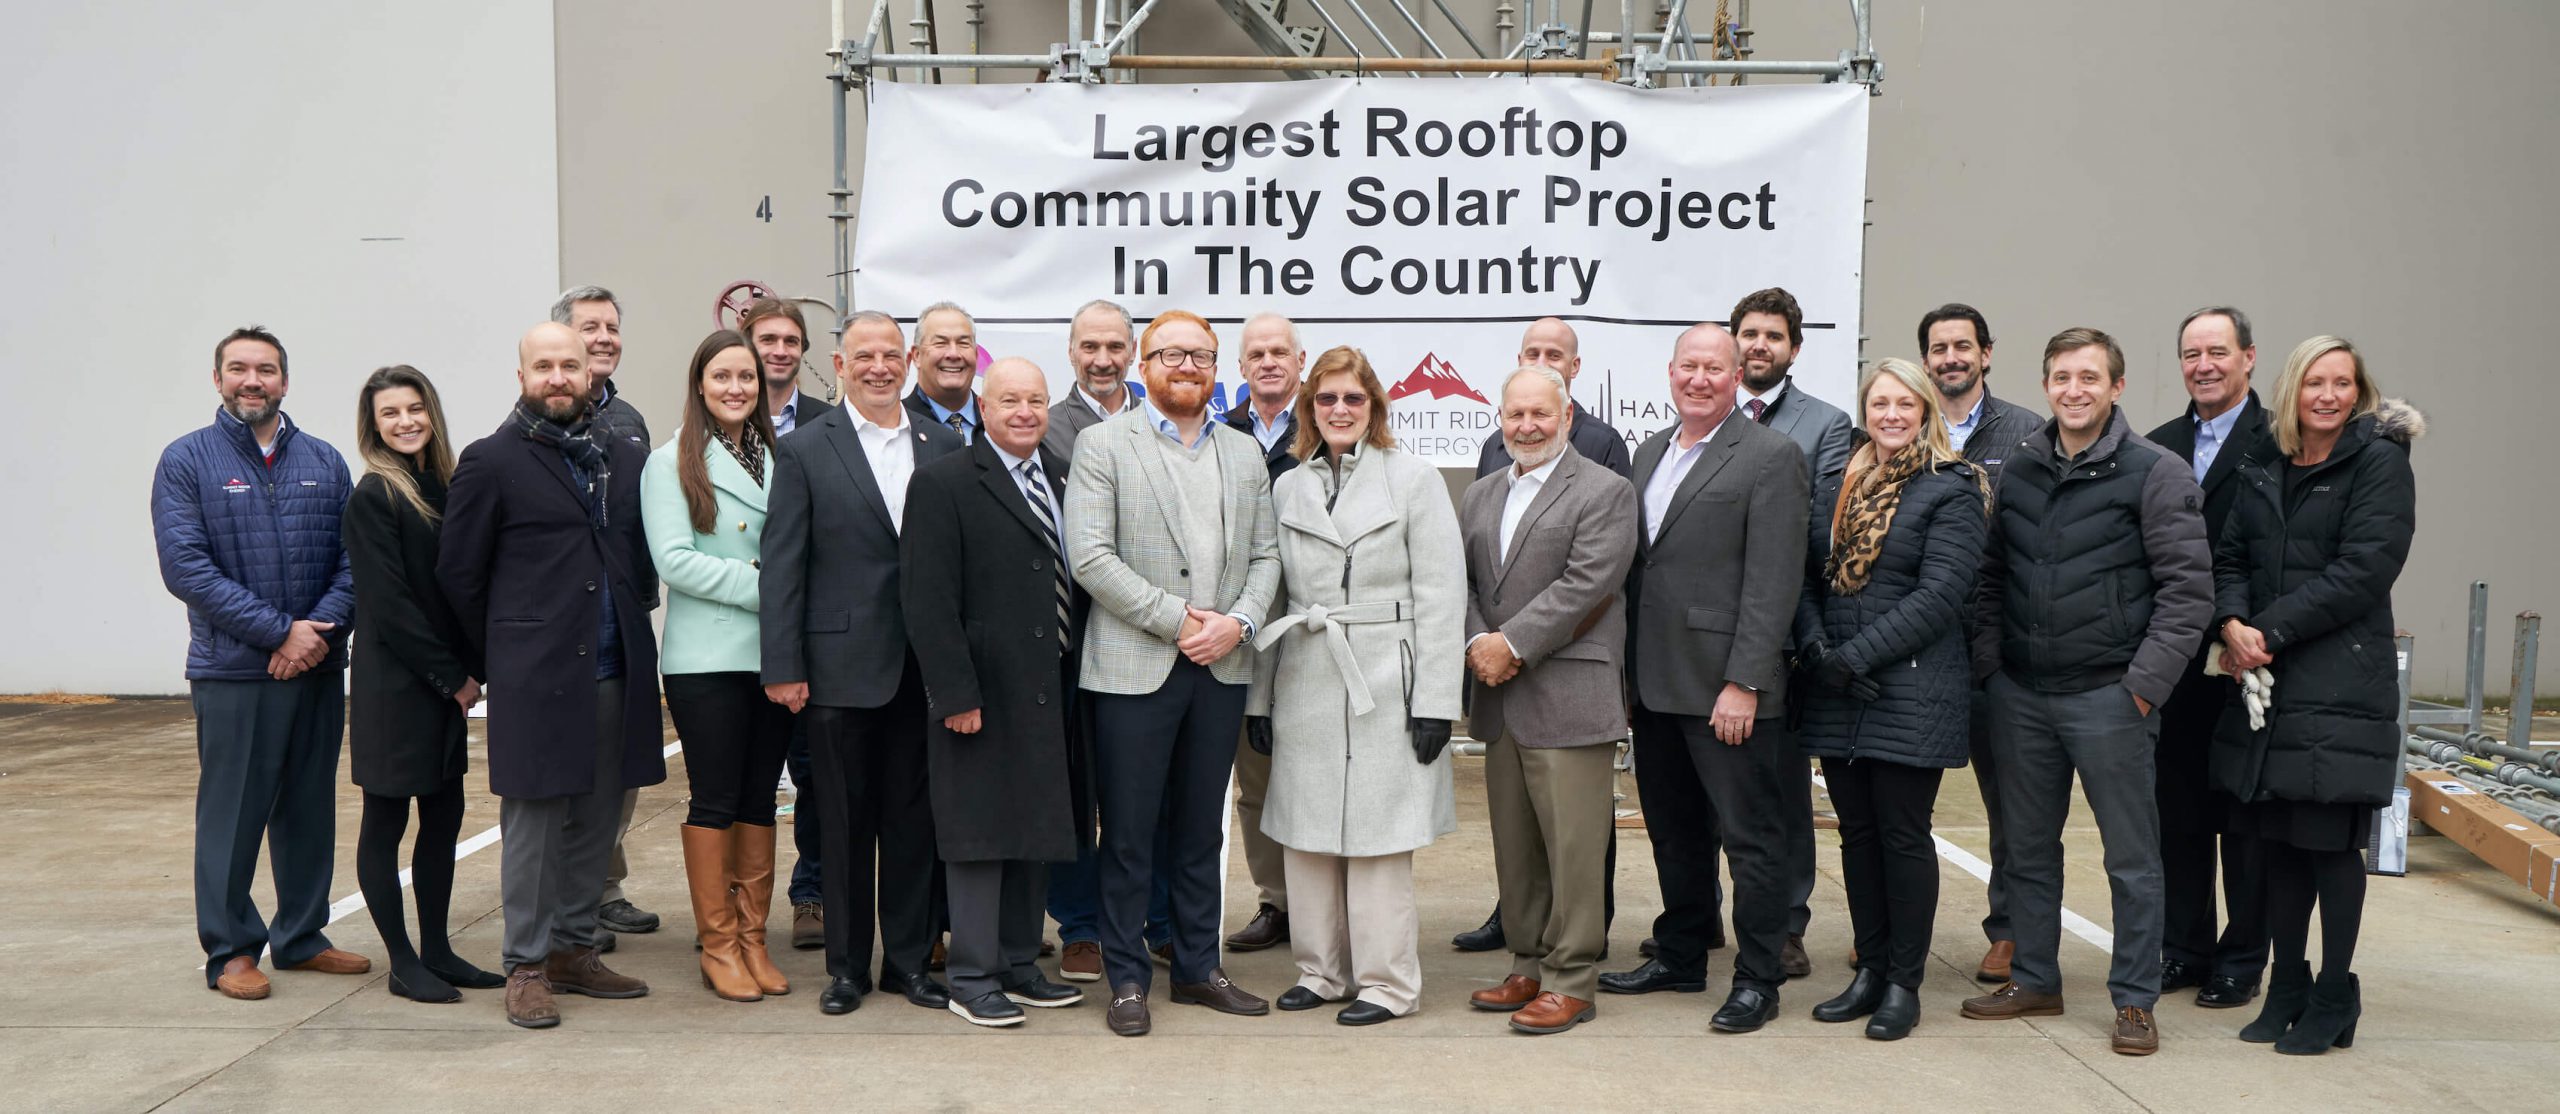 AEW Works with Black Bear, Summit Ridge on Maryland Community Solar Installation